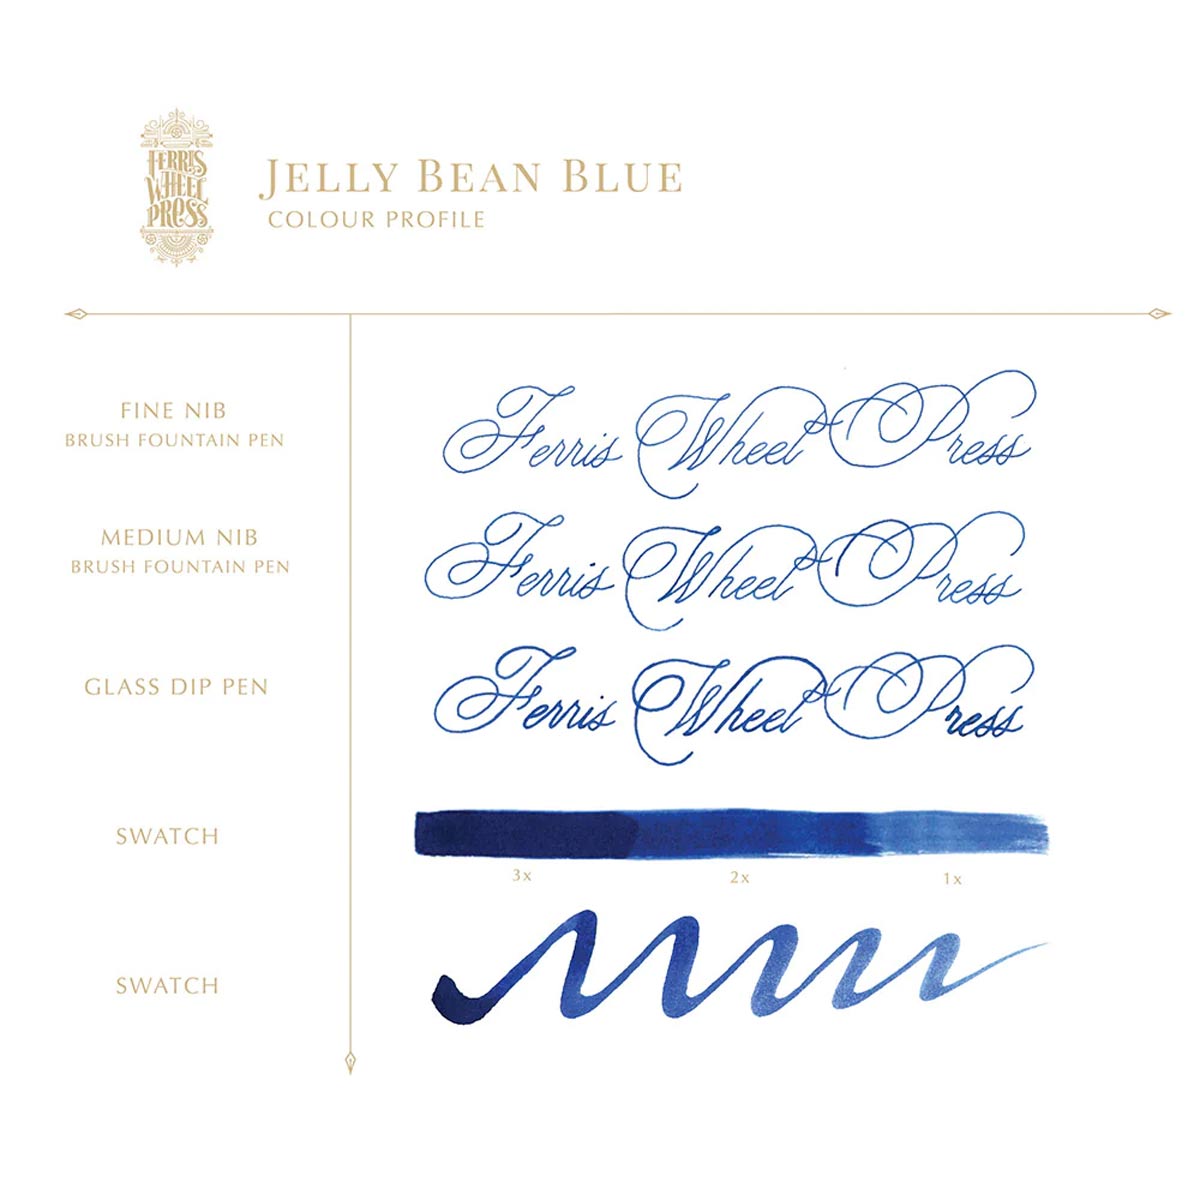 Ferris Wheel Press - Jelly Bean Blue, 38 ml